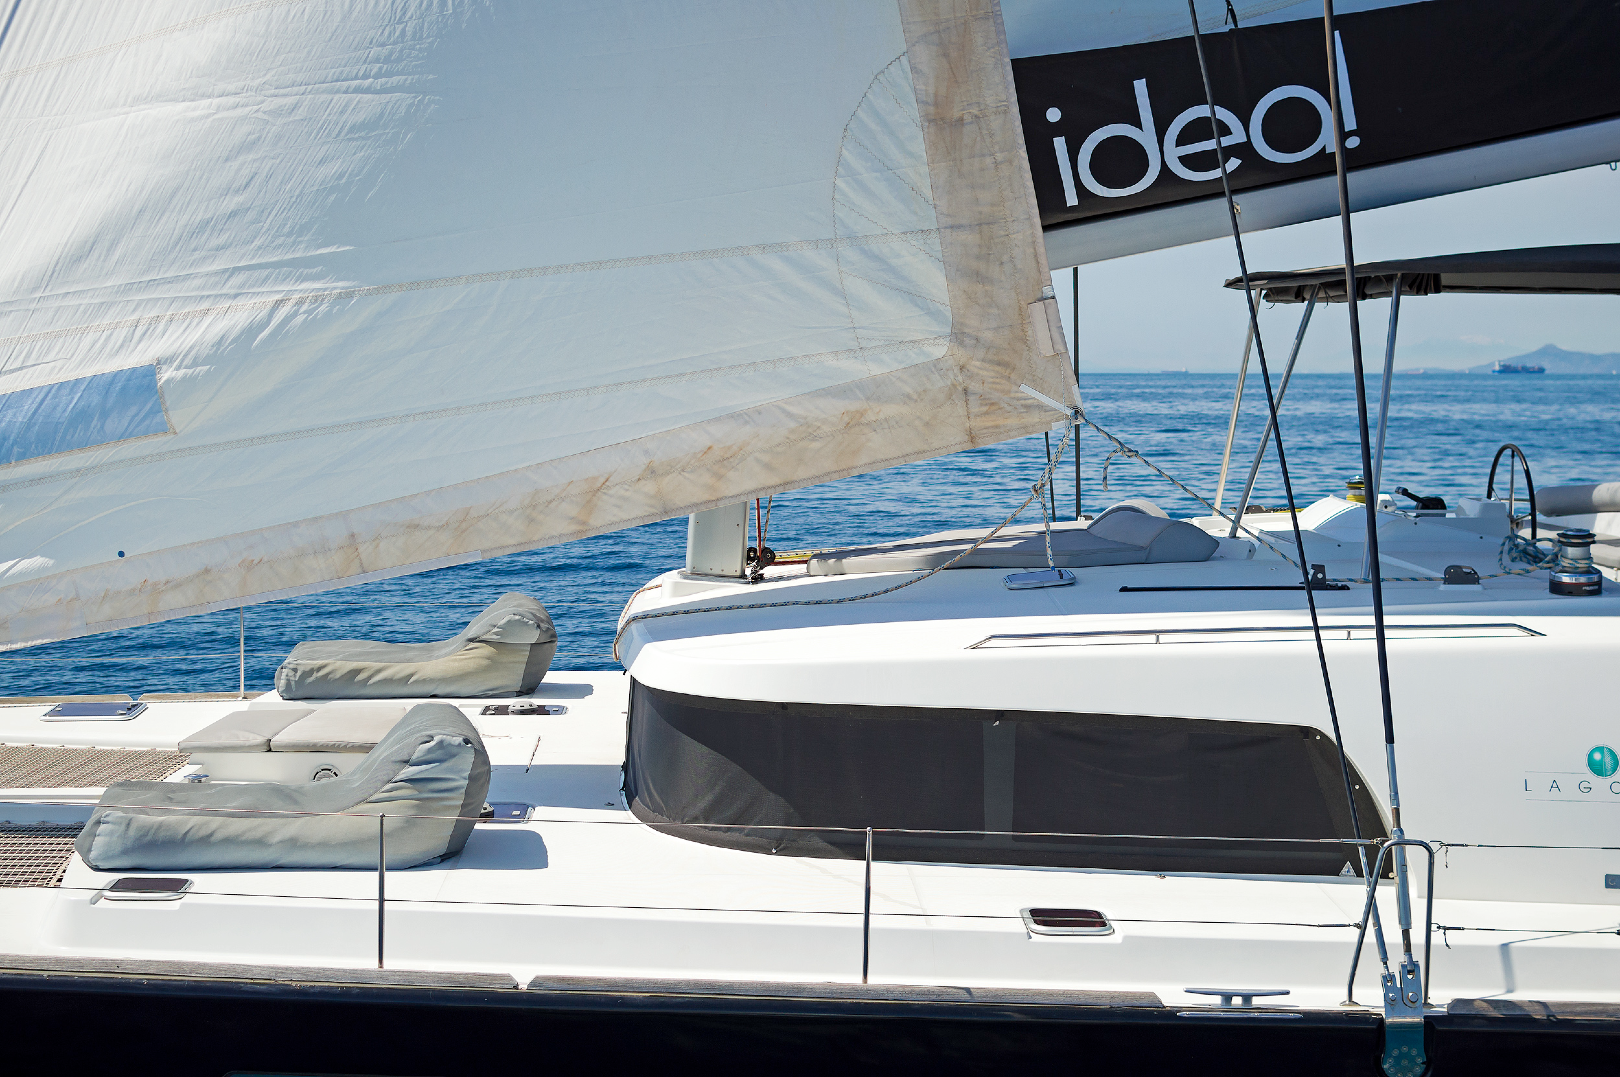 sailing-catamaran-Idea!-close-side-view